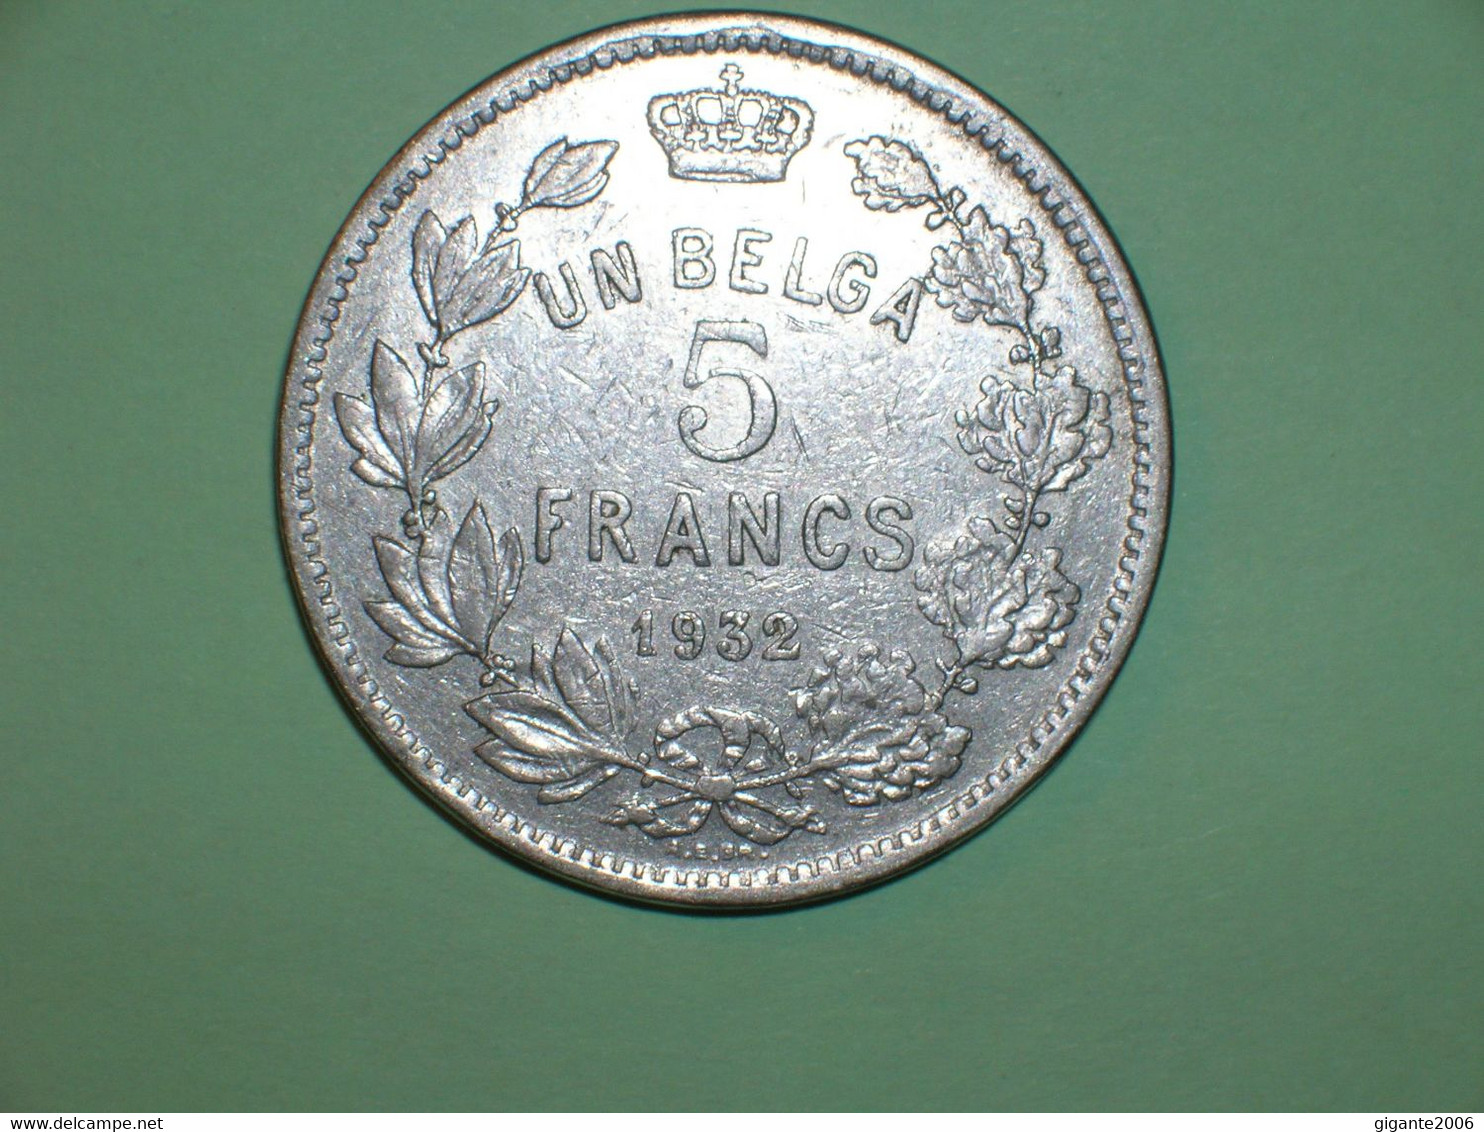 BELGICA 5 FRANCOS 1932 FR (3294) - 5 Frank & 1 Belga